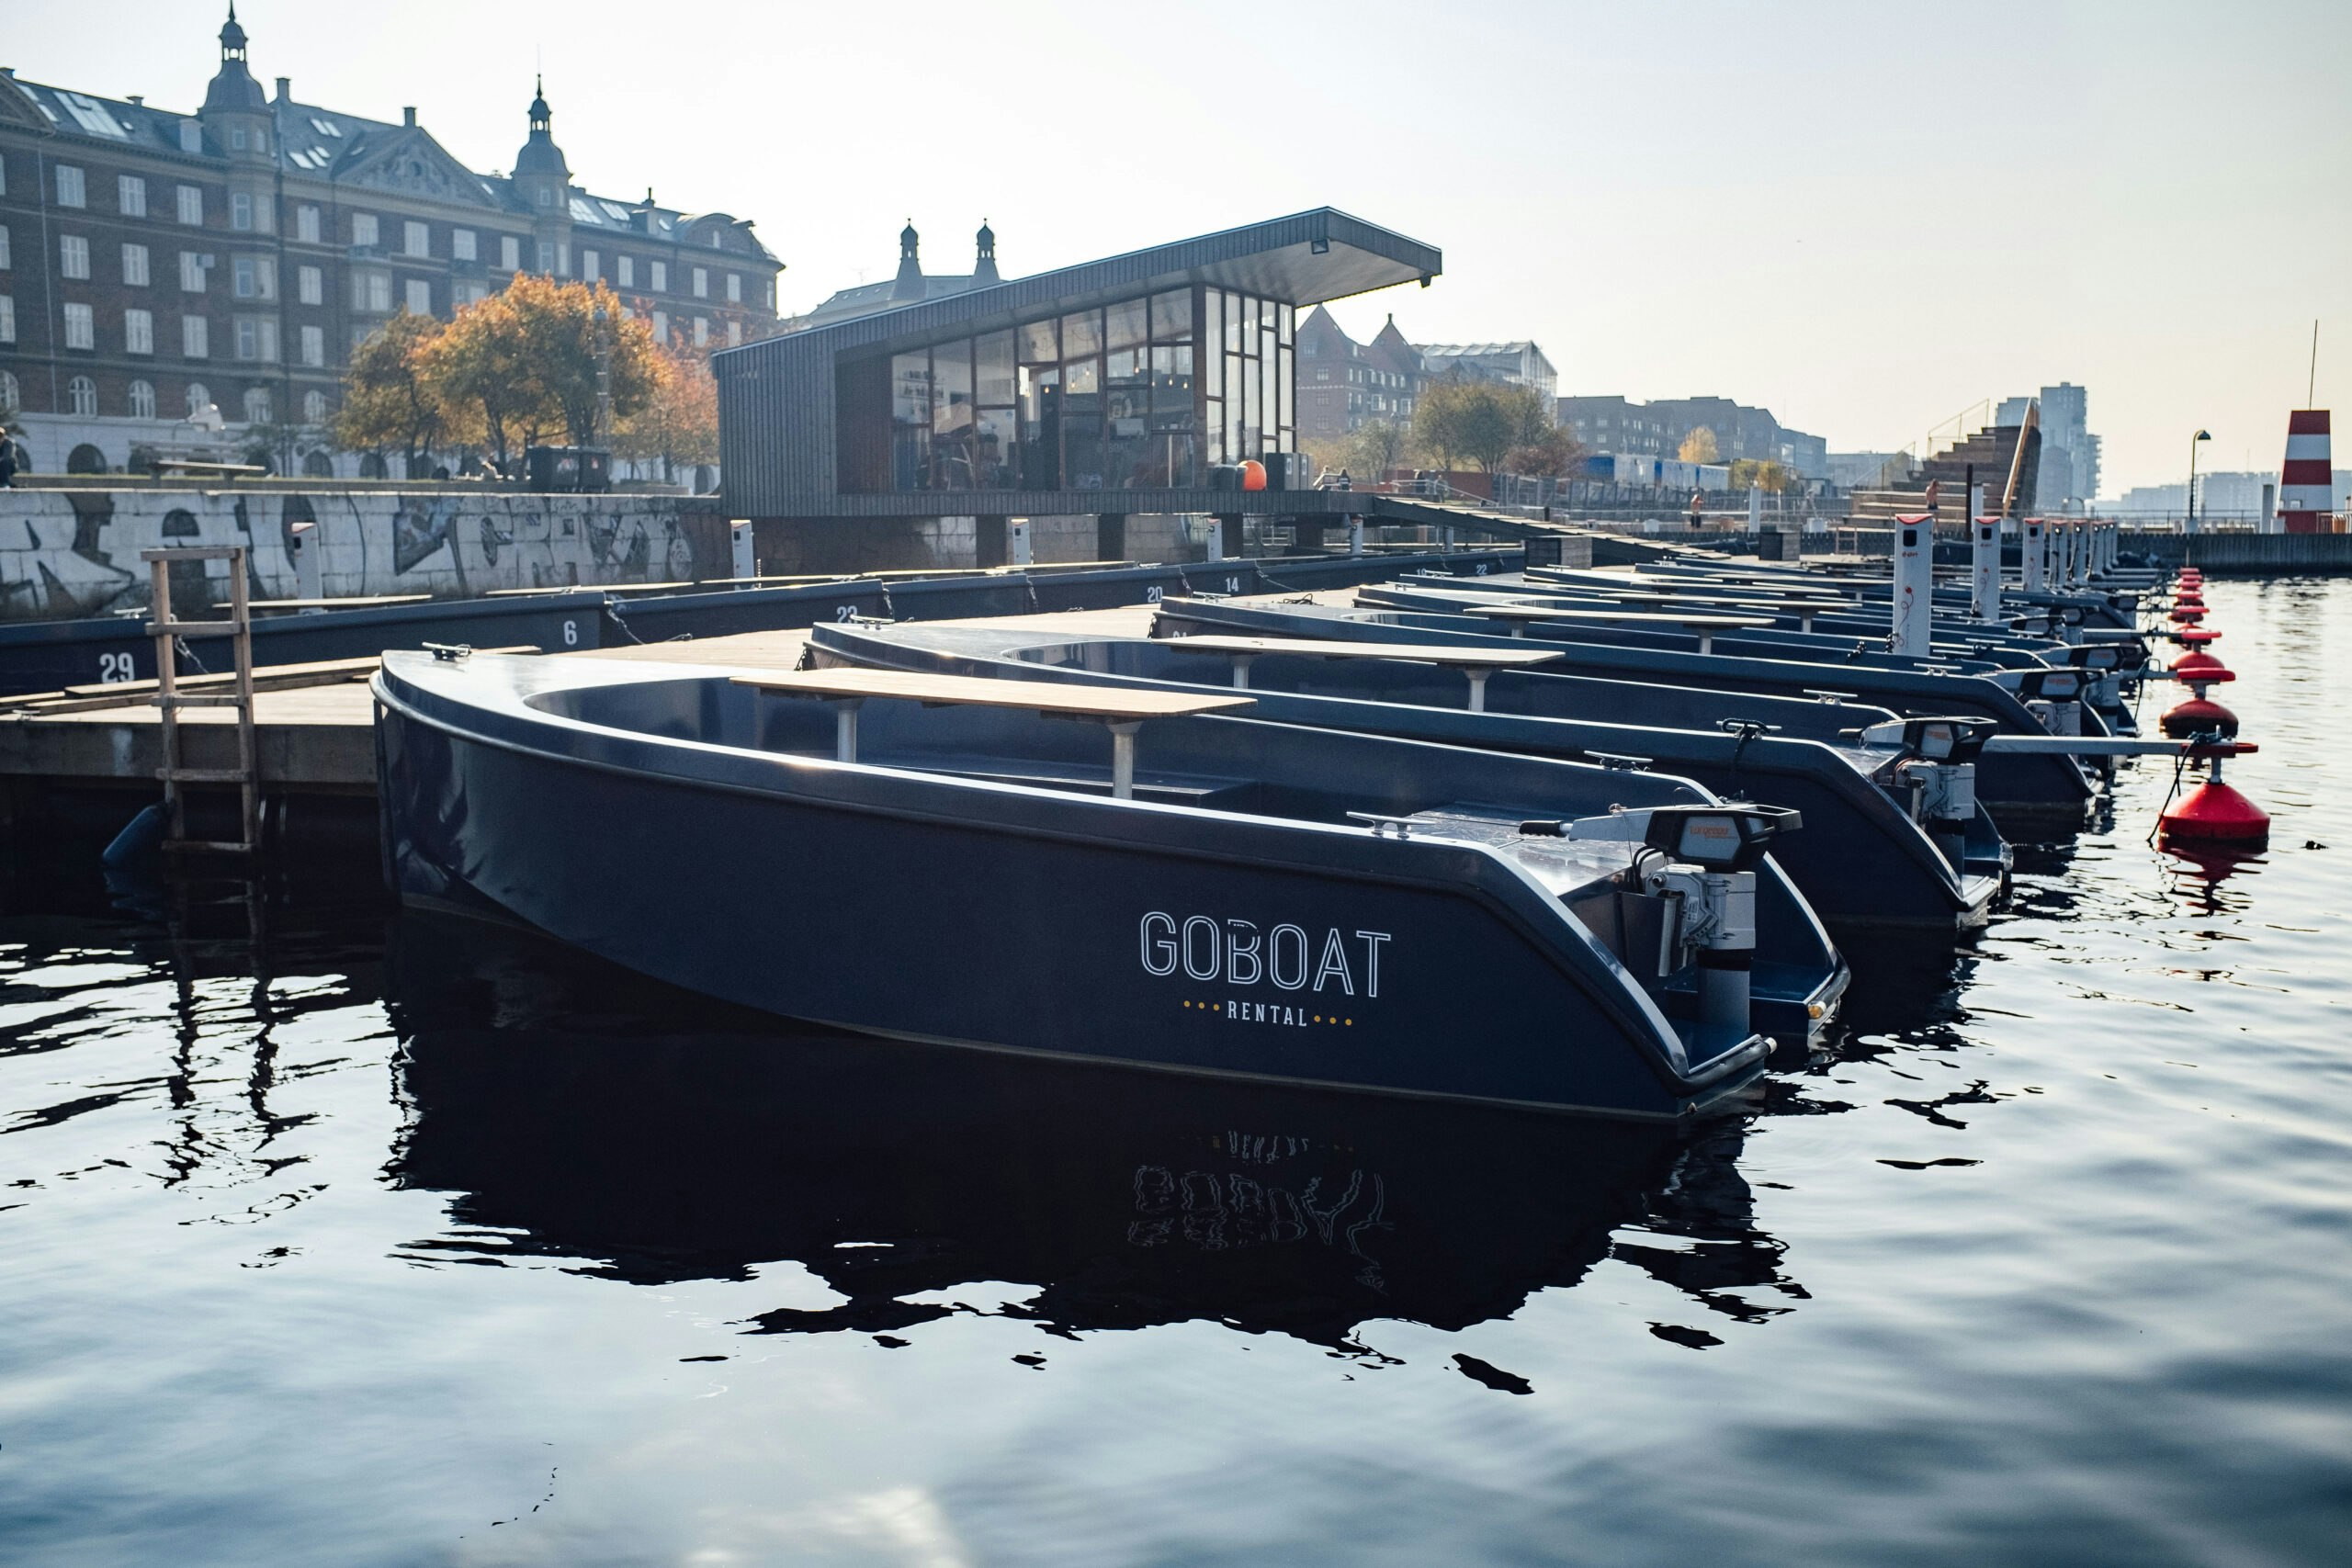 Boat rental at Islands Brygge in Copenhagen GoBoat